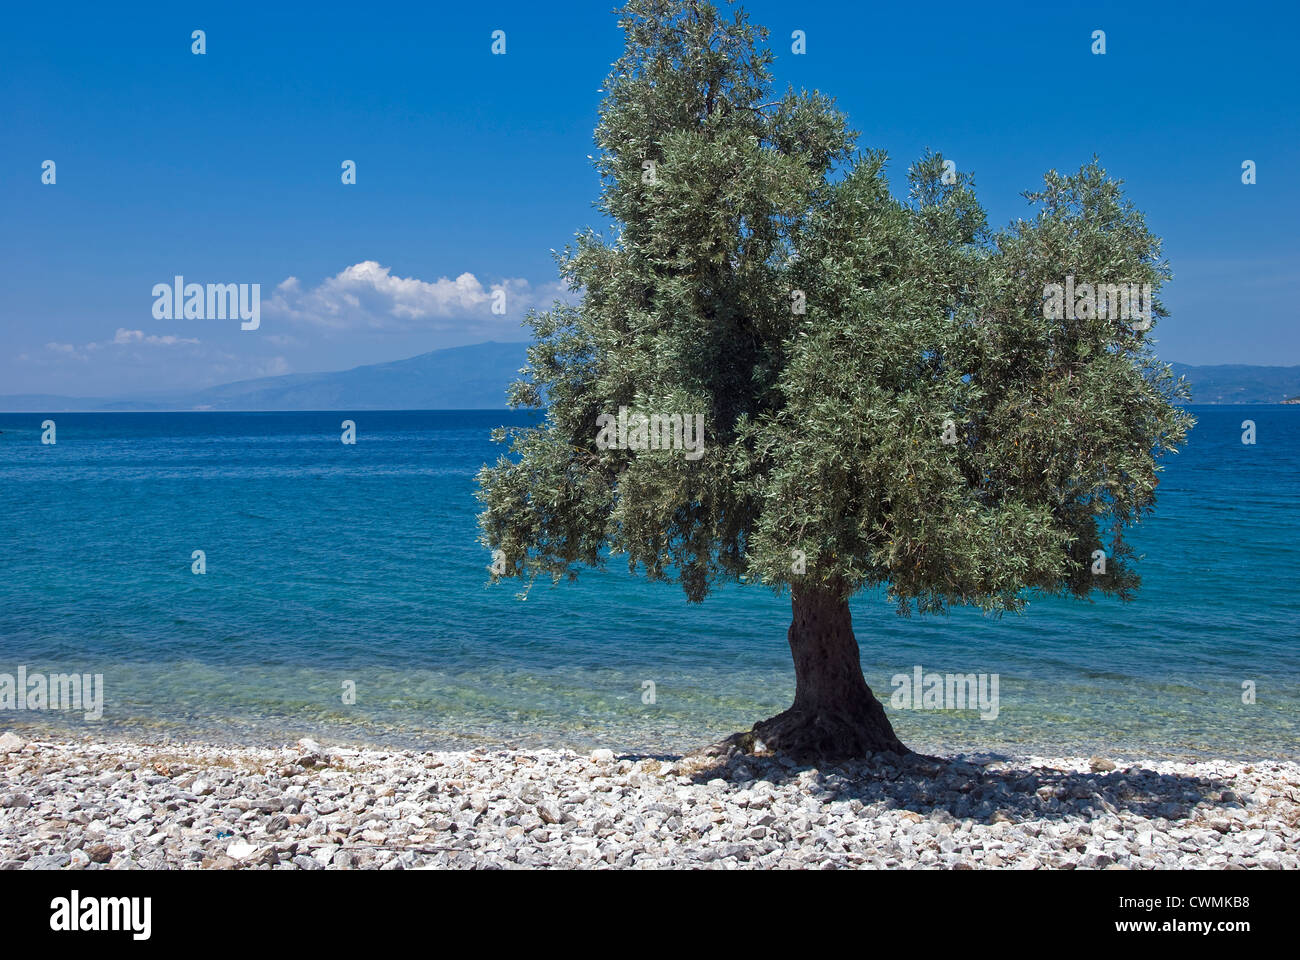 Olive tree on the beach (Pelion peninsular, Thessaly, Greece) Stock Photo